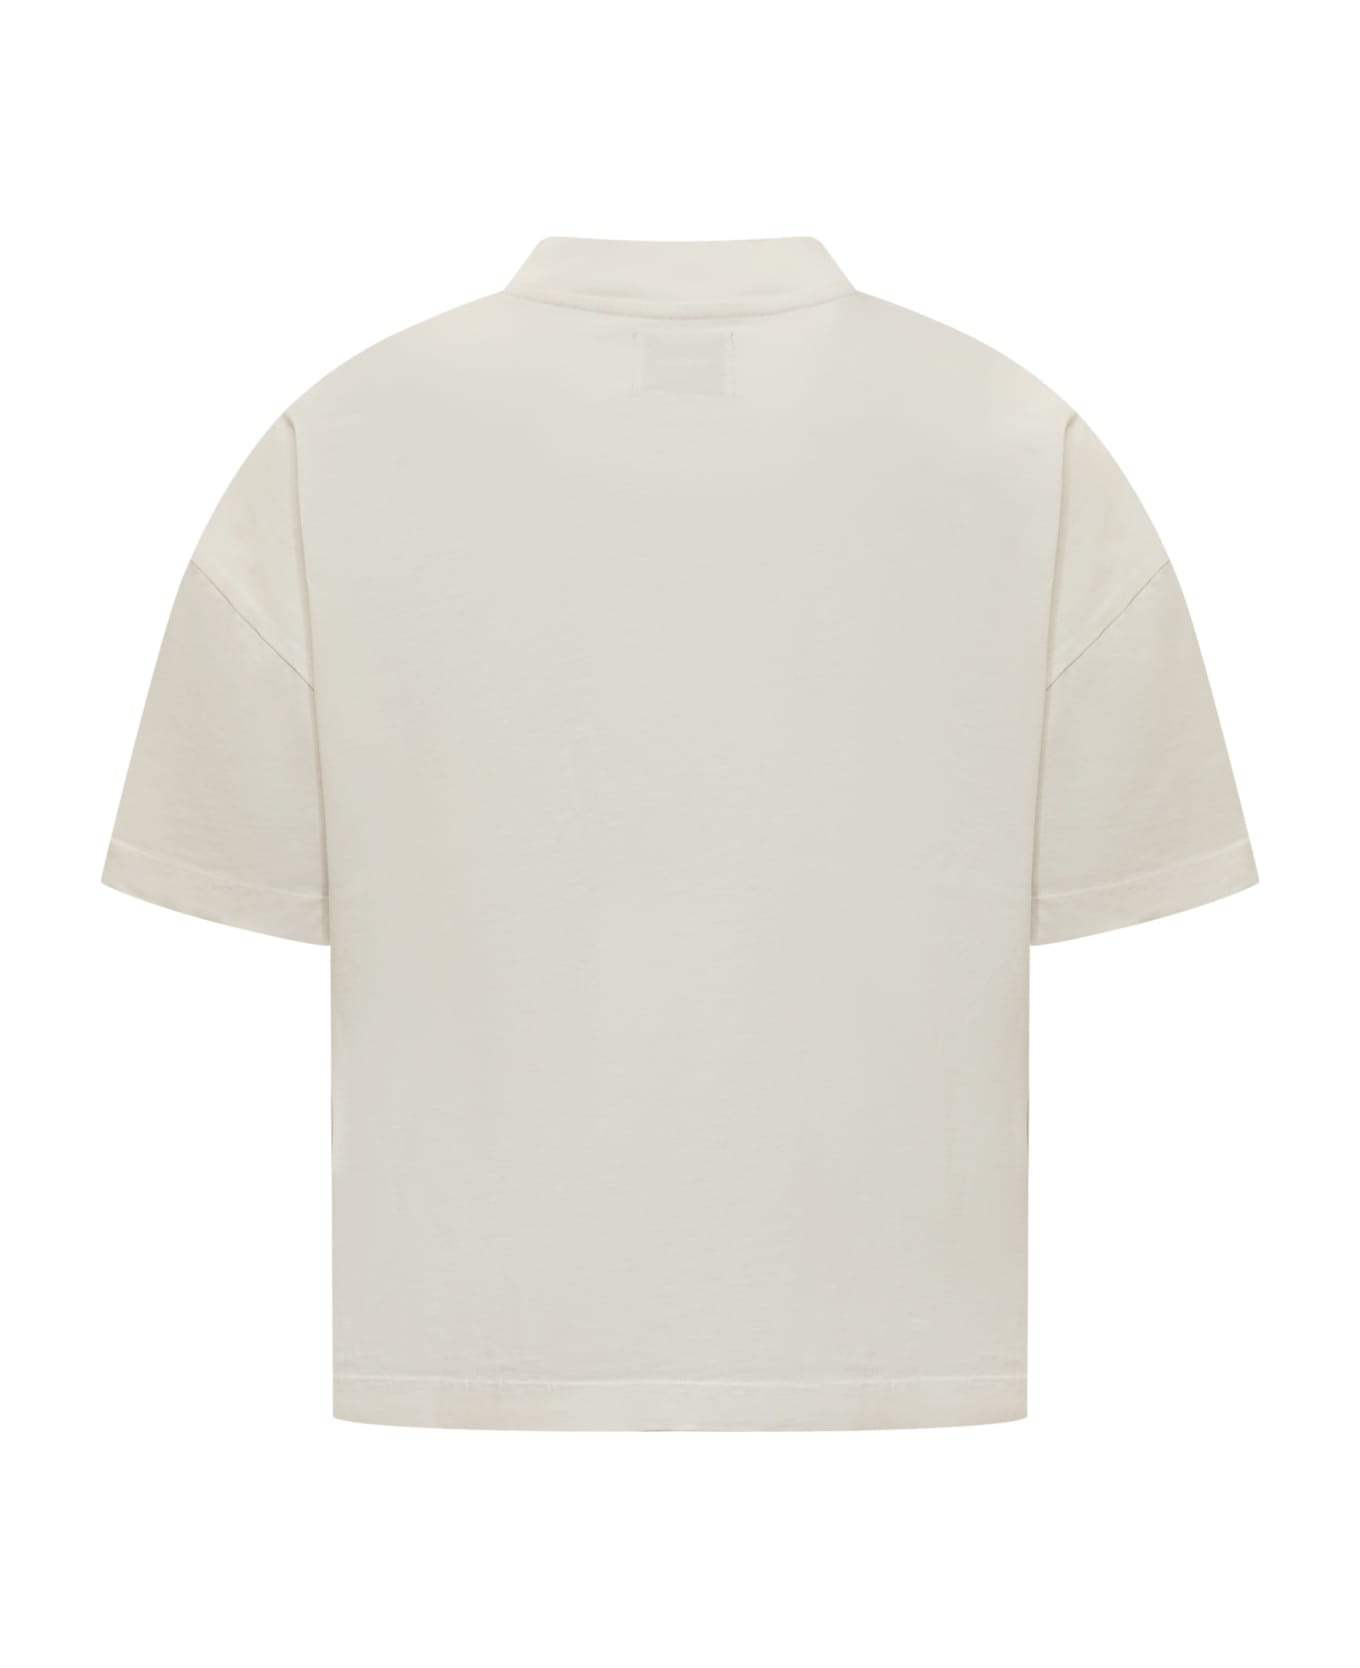 Bonsai Oversize T-shirt - OFF-WHITE